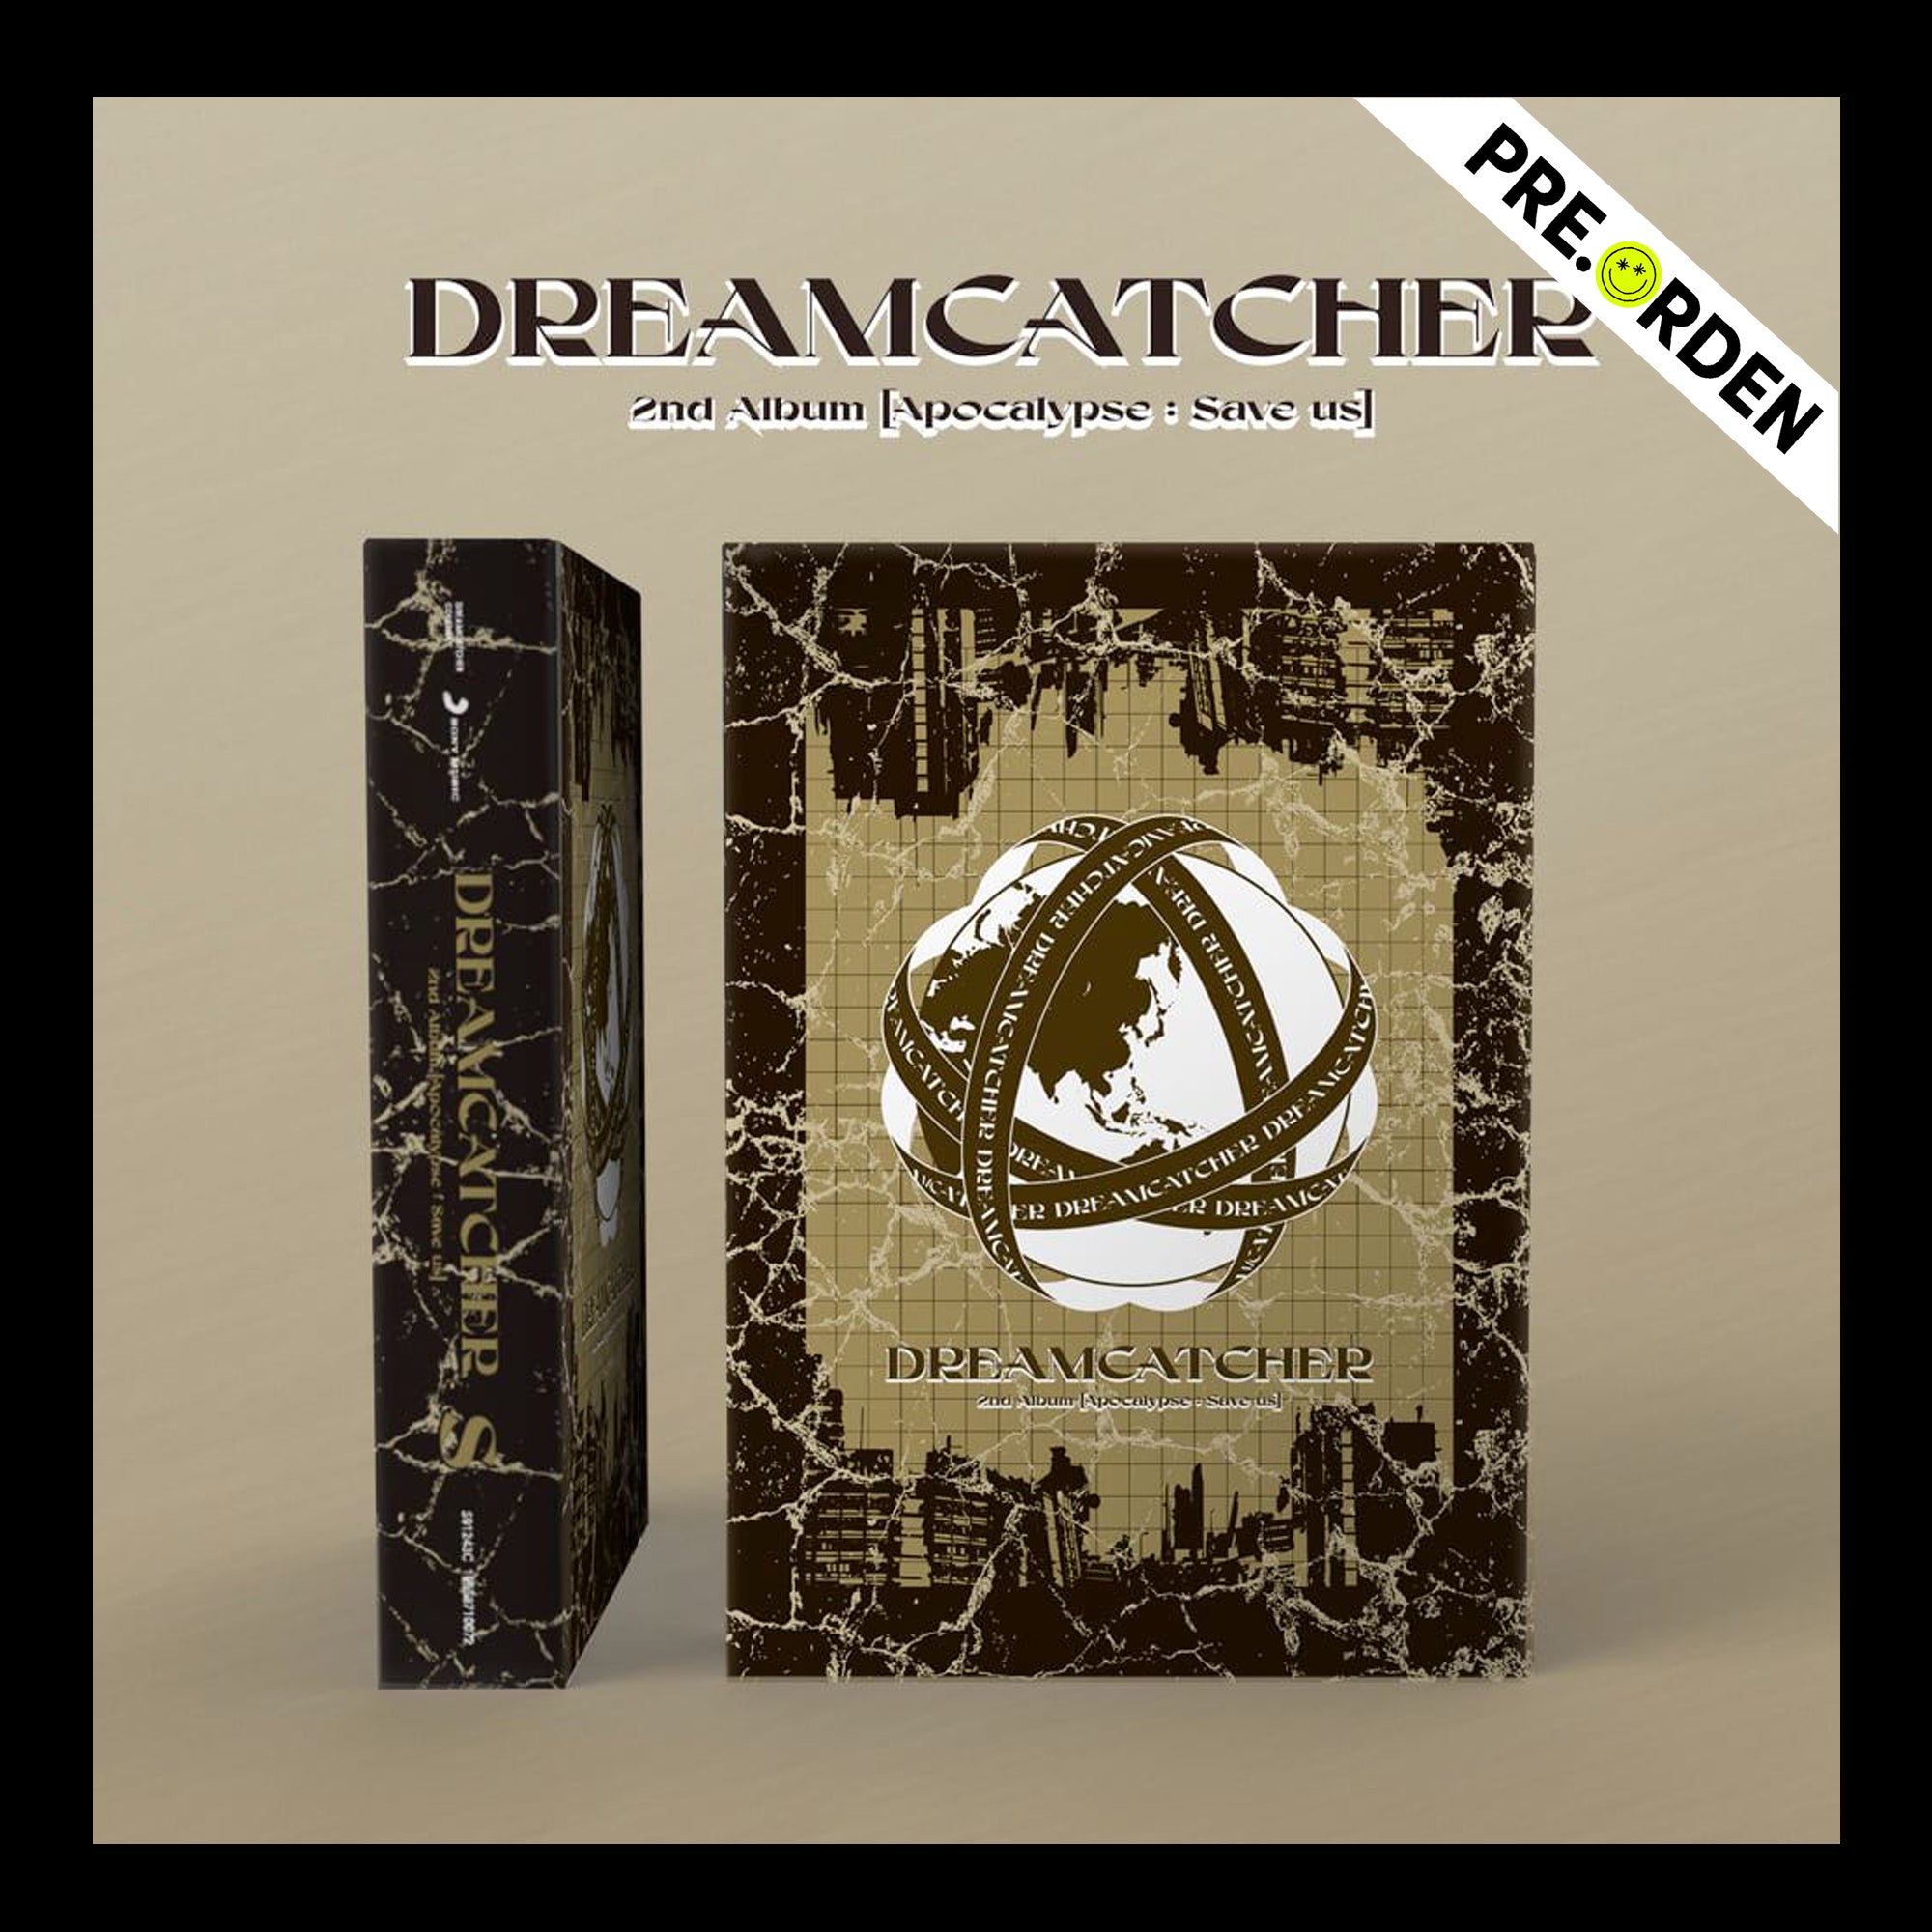 Dreamcatcher: Apocalypse - Save us (S ver.) Limited Edition